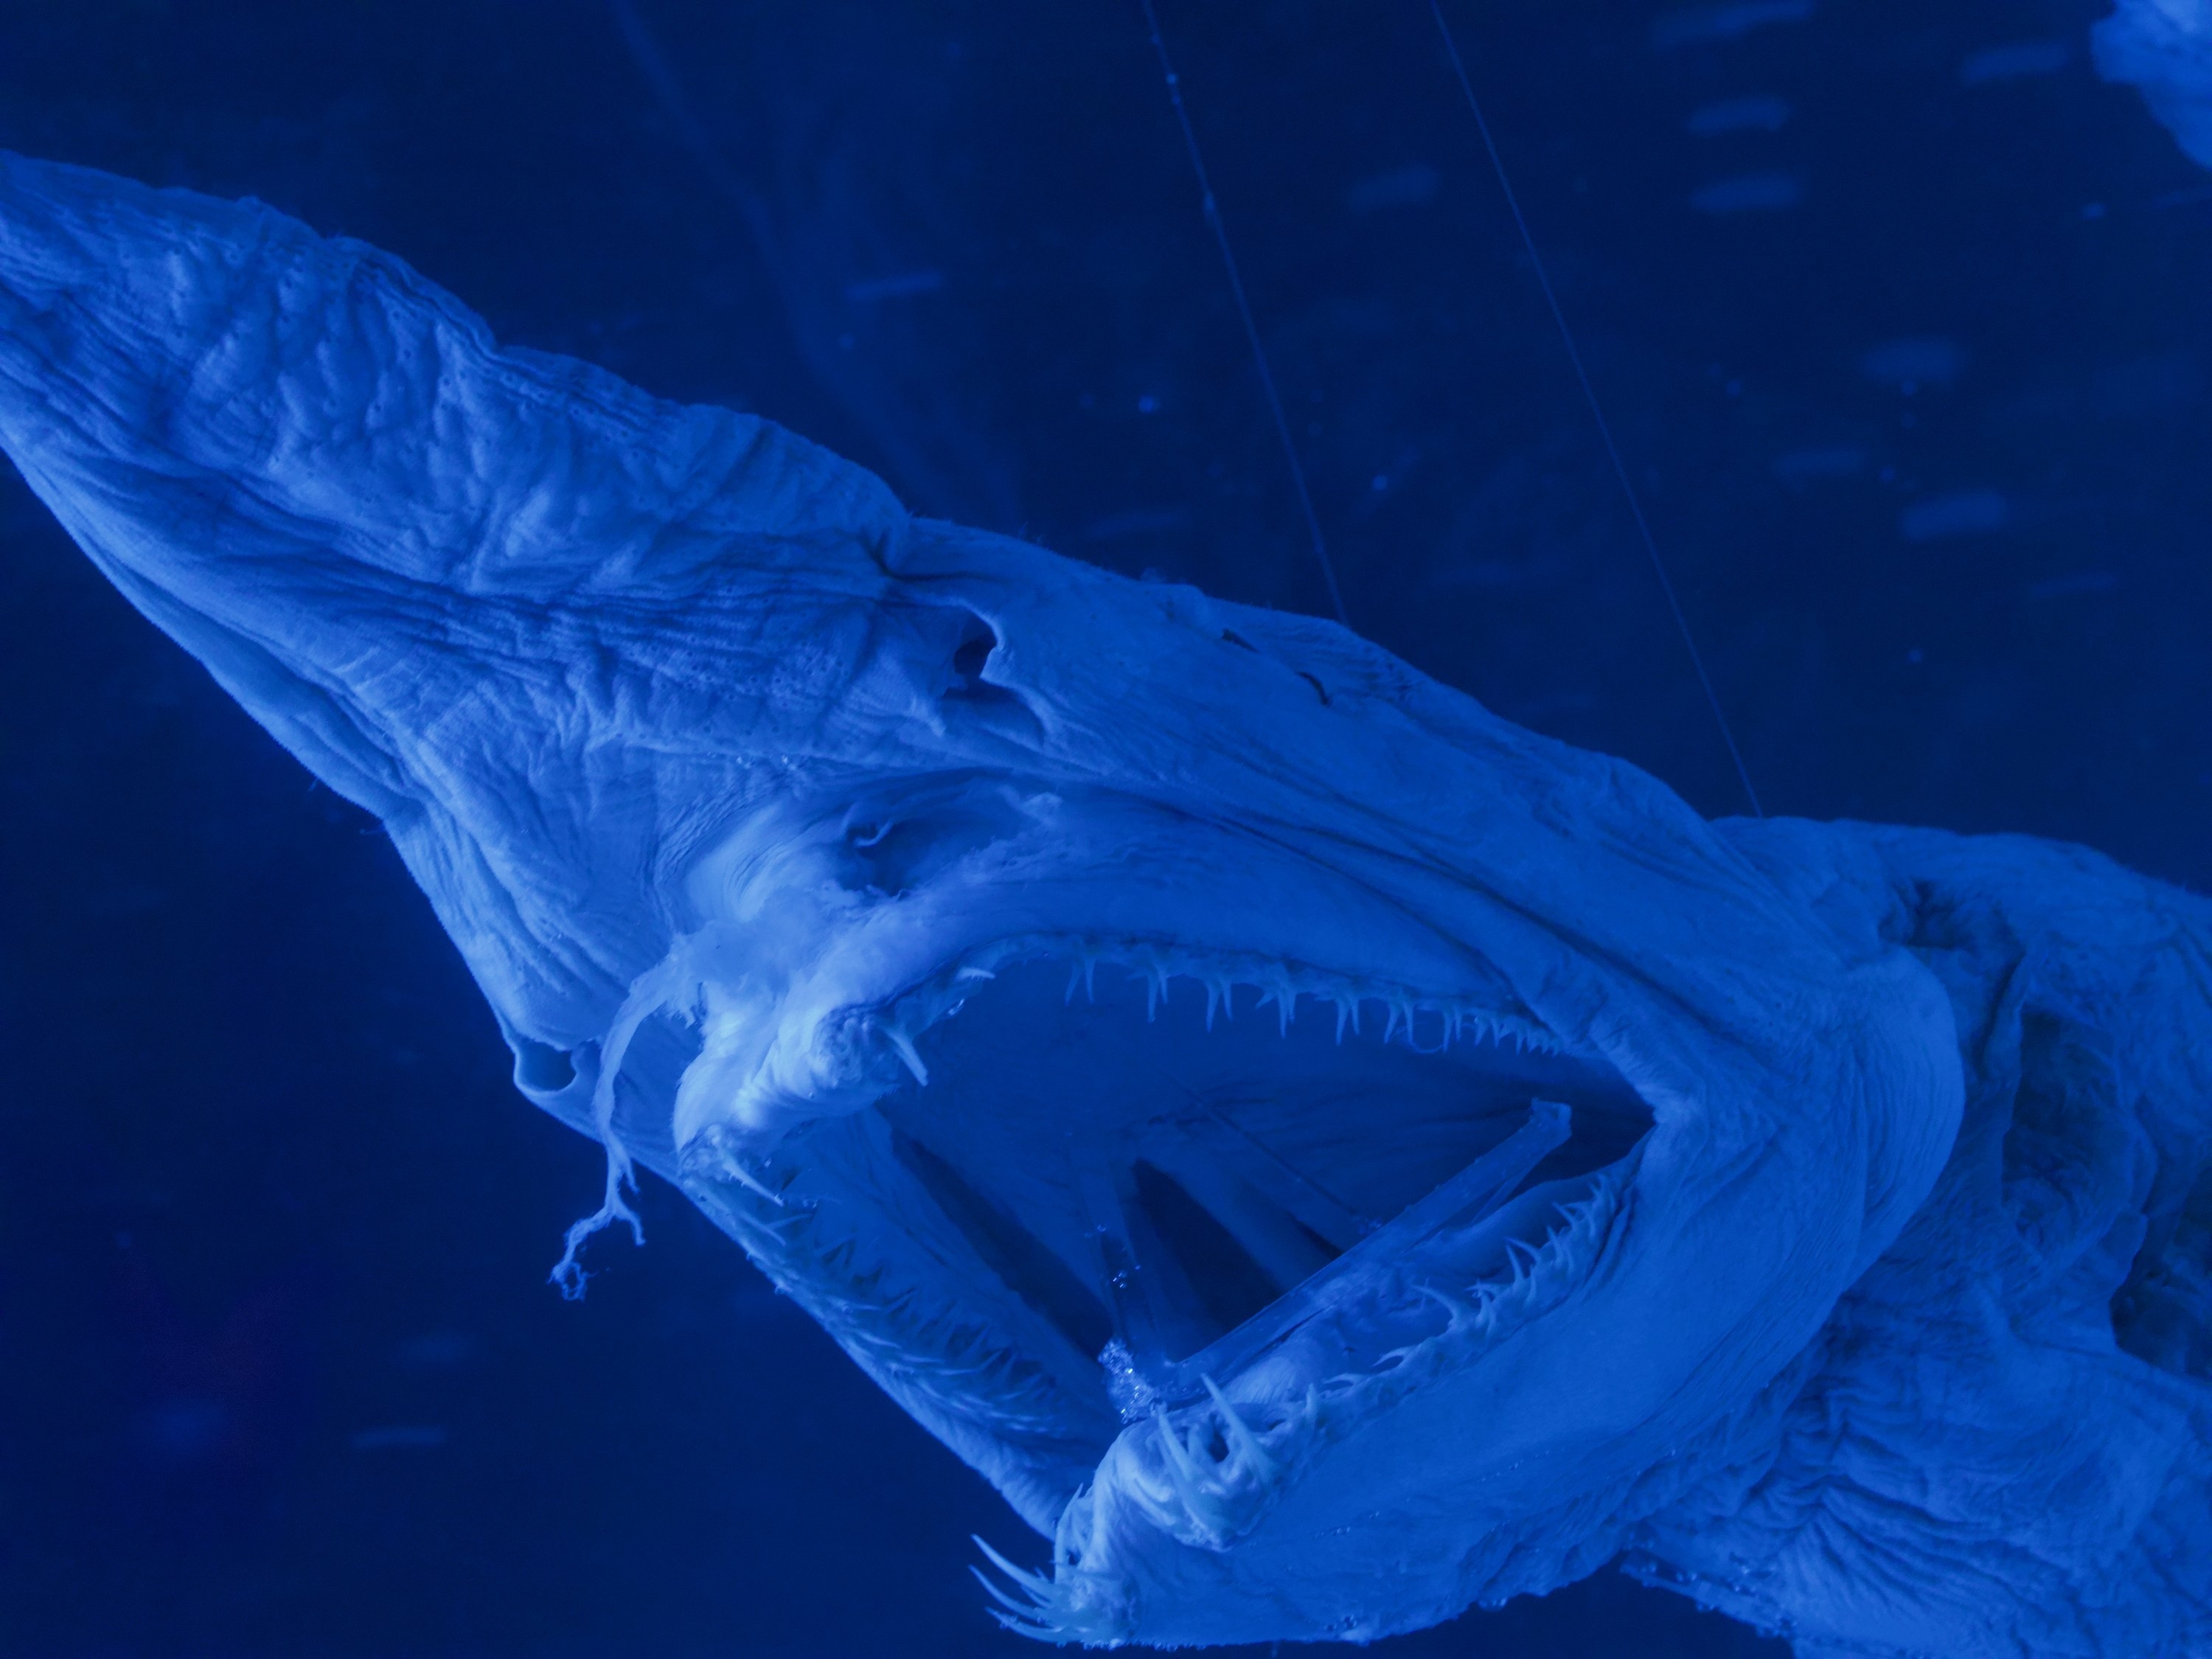 Carcass of preserved goblin shark under blue light